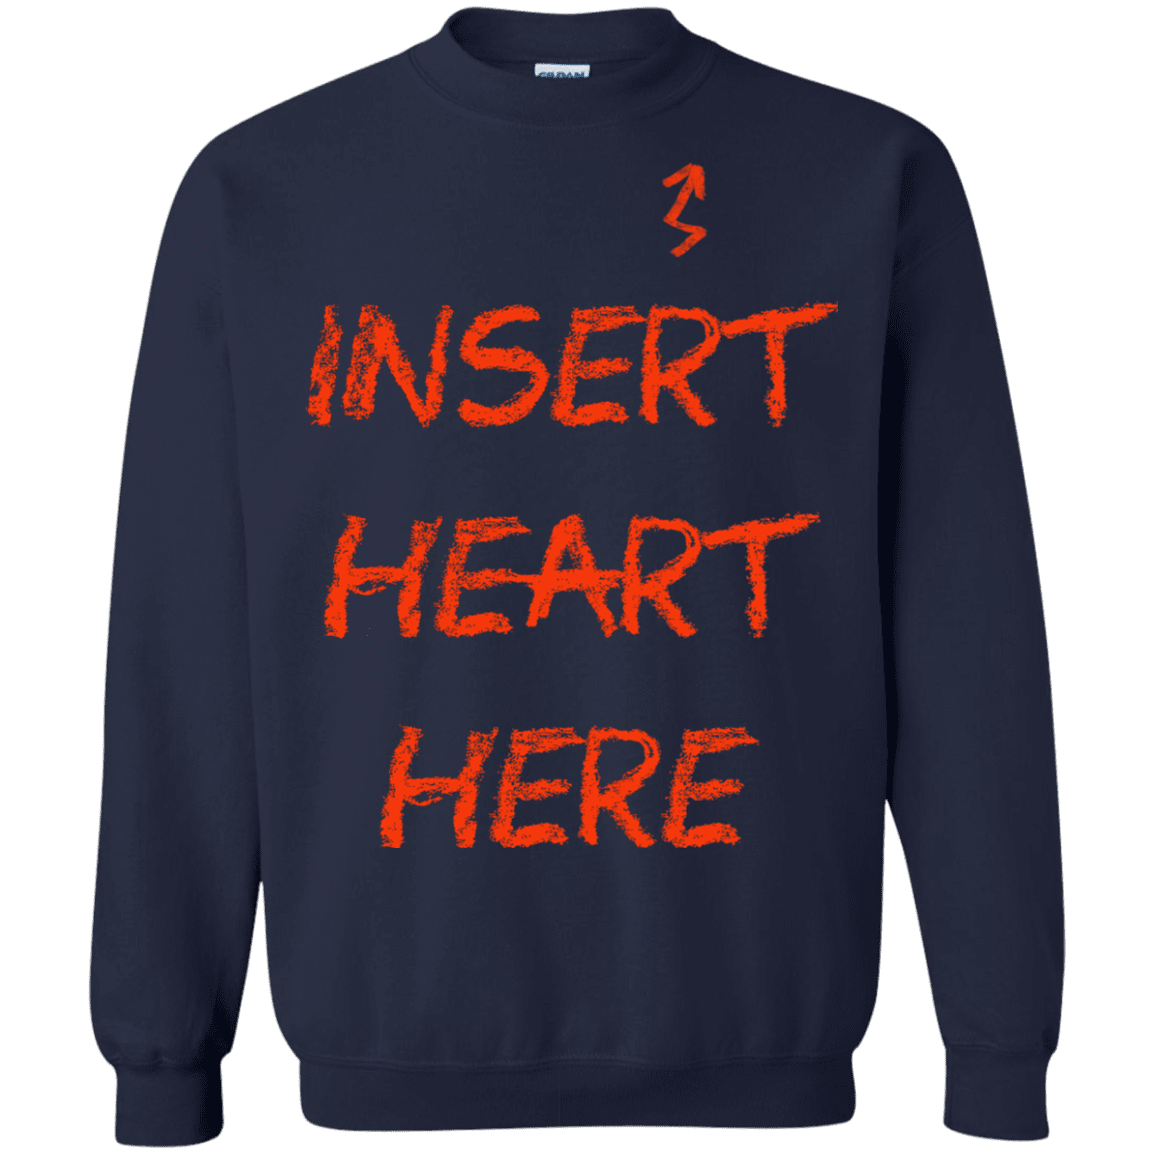 Sweatshirts Navy / S Insert Heart Here Crewneck Sweatshirt